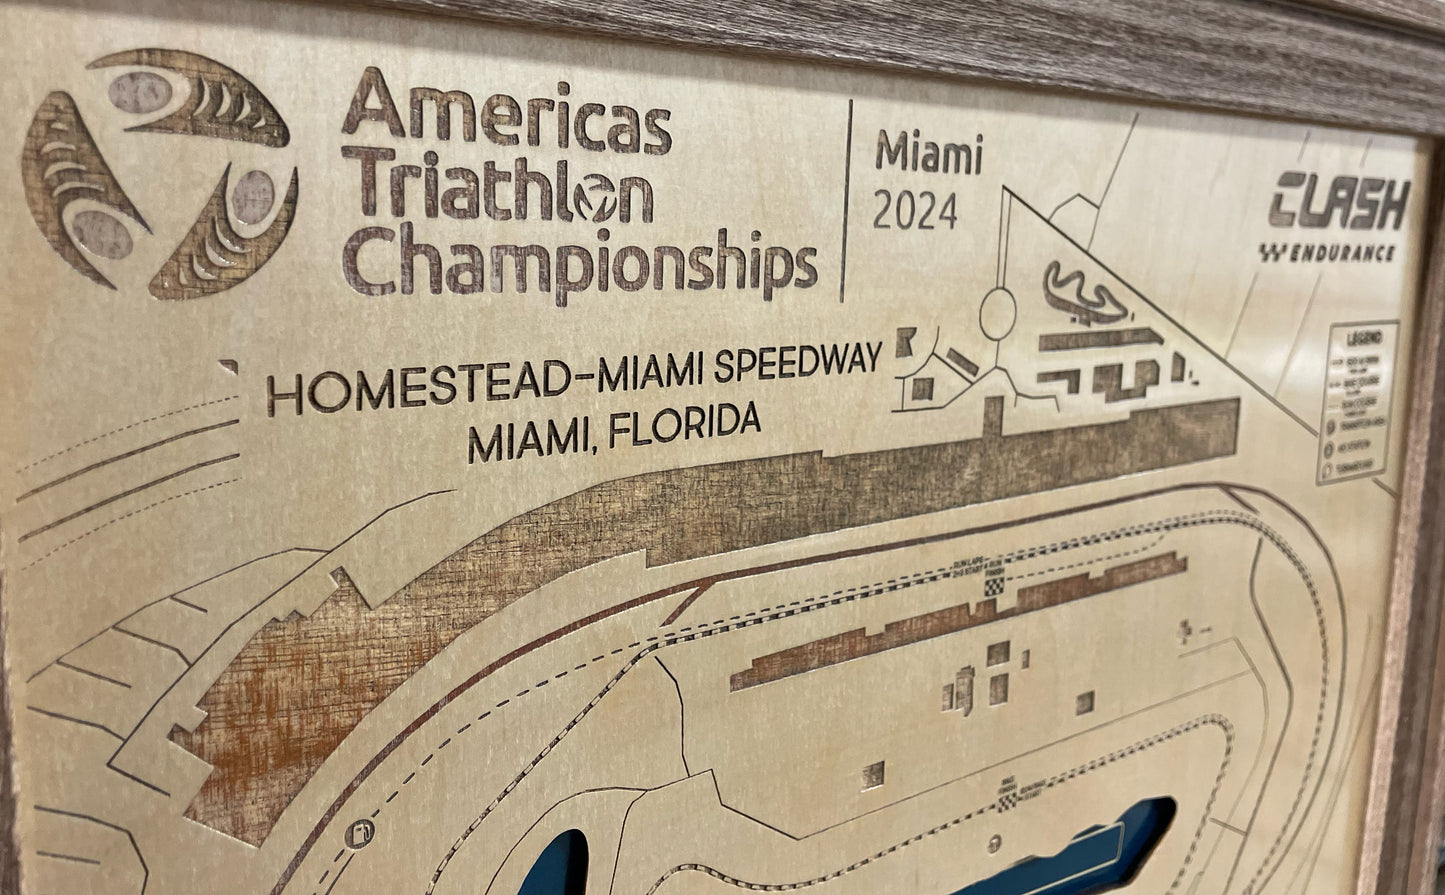 CLASH Endurance - Americas Triathlon Championship